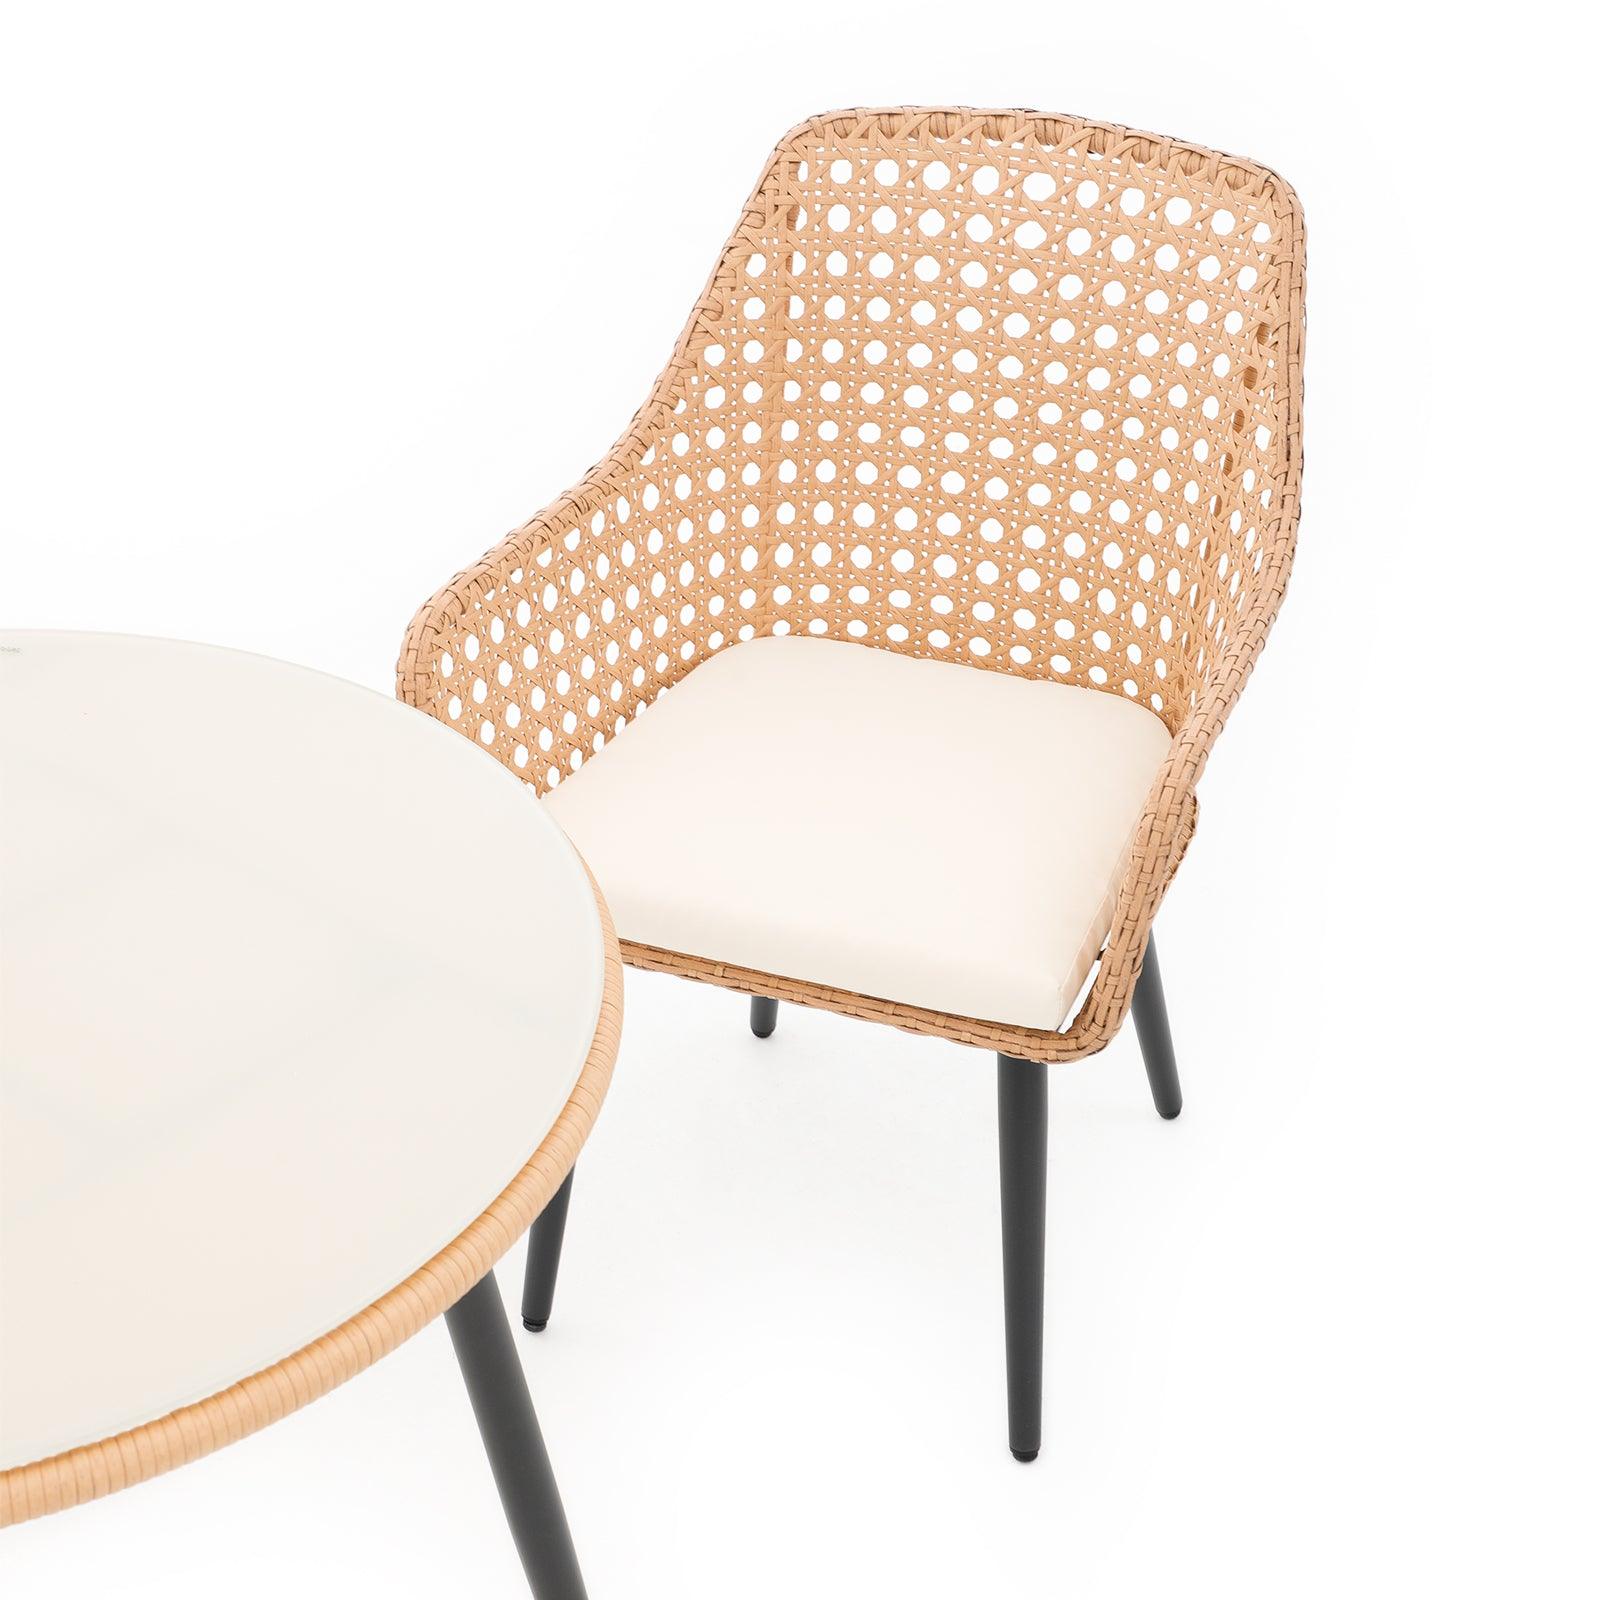 Menorca Dining set, Table and Chair, Wicker Design- Jardina Furniture